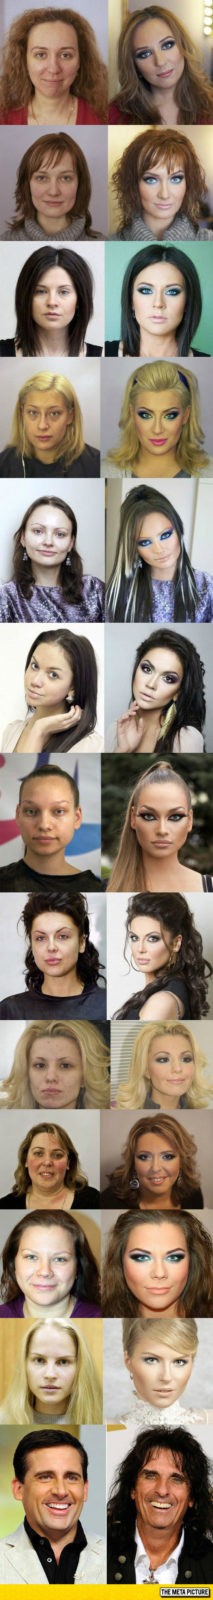 Top 13 makeup transformations